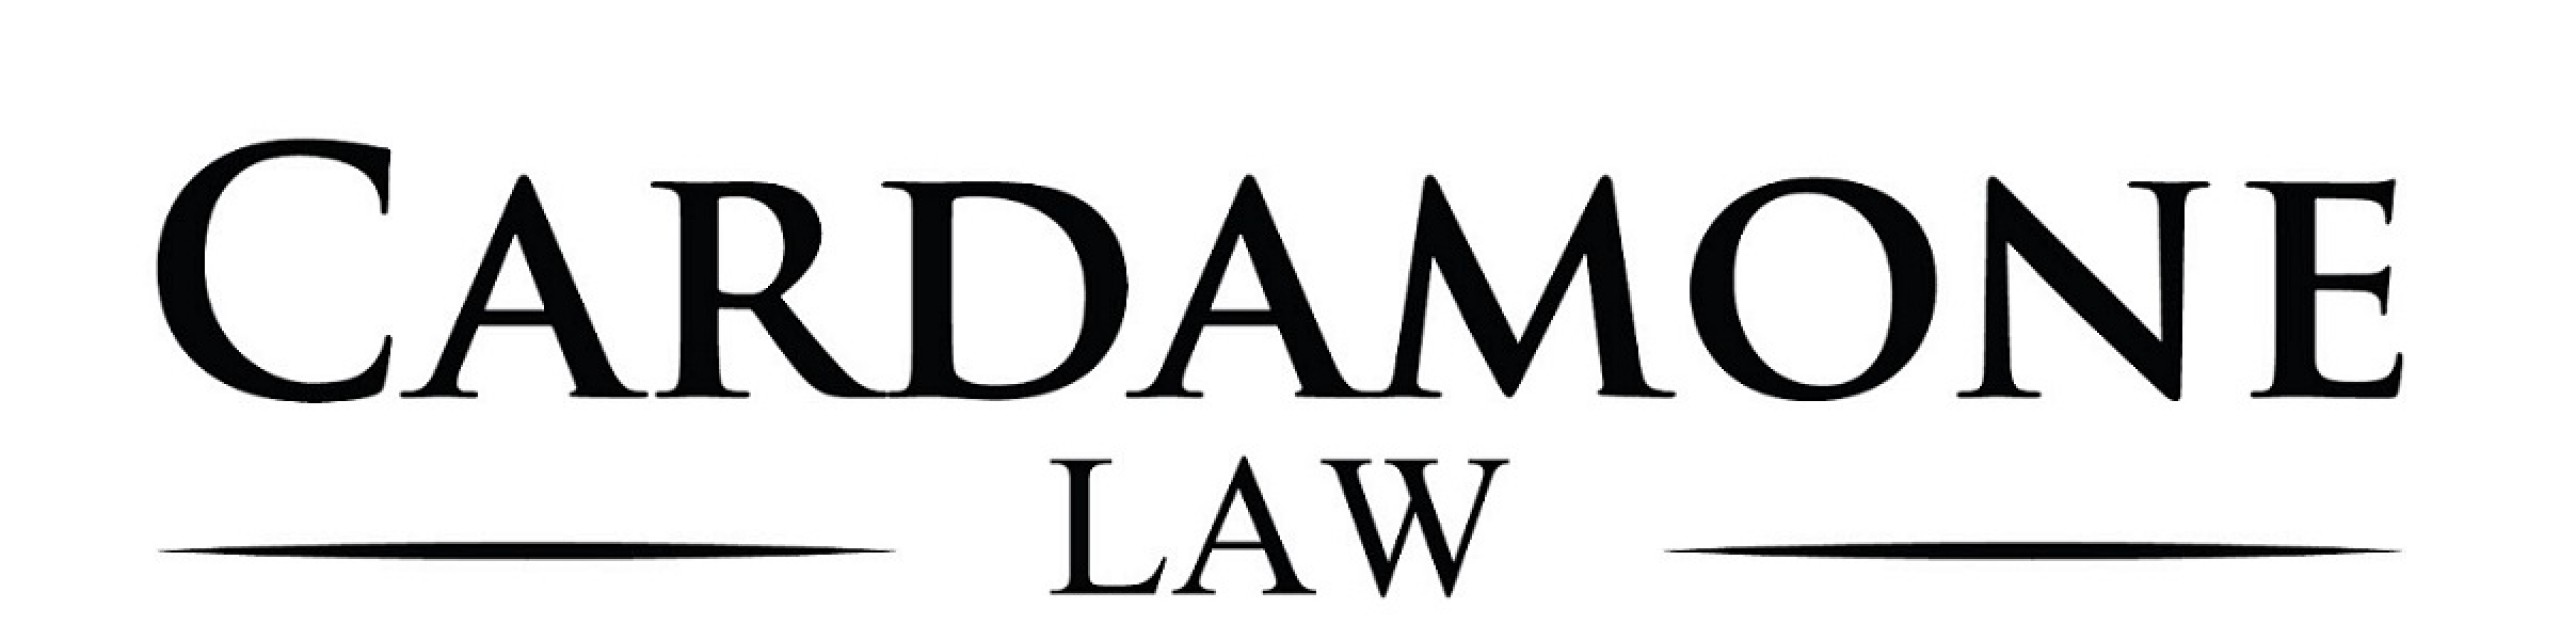 cropped-cardamone-law-logo-jpegfacebook3.jpg